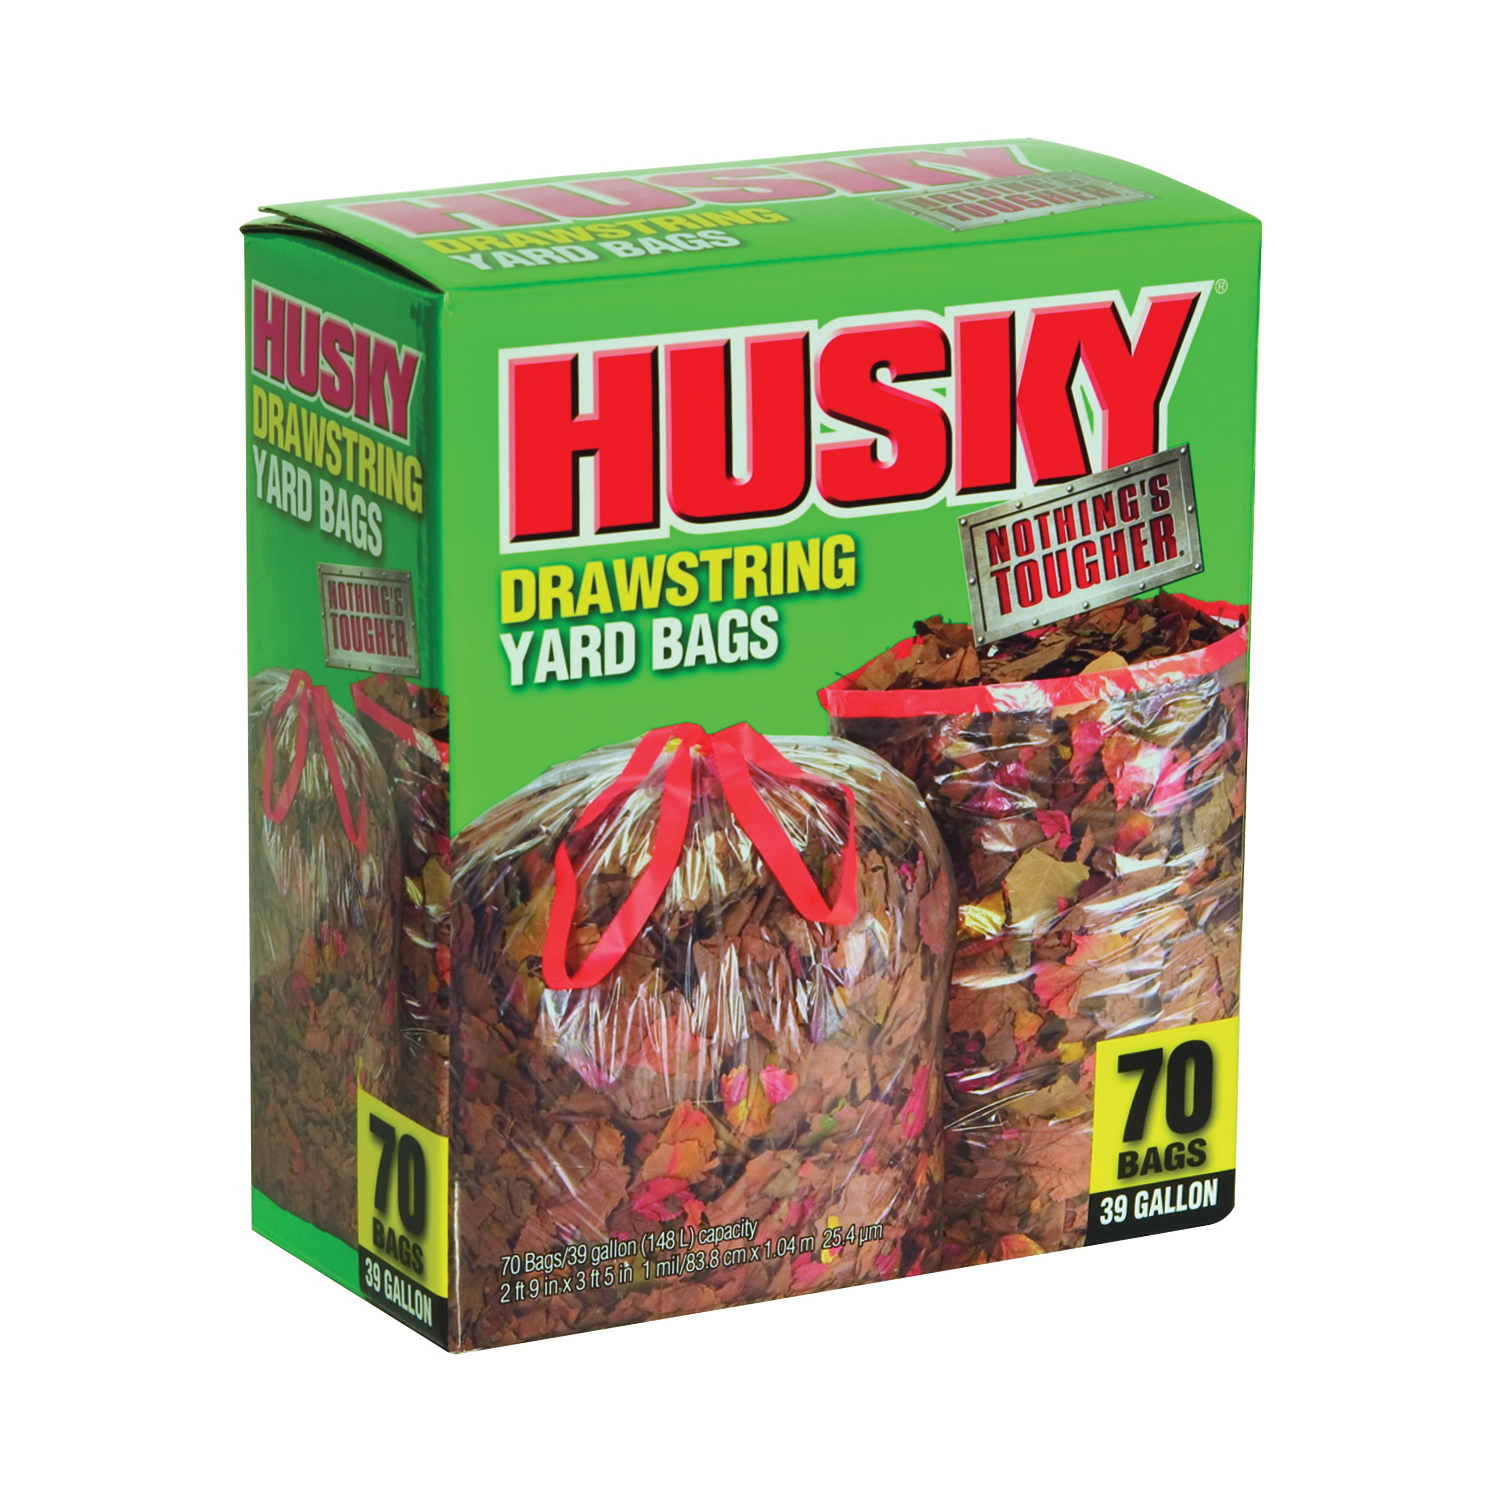 Husky HK13DS120C-P Kitchen Trash Bag, 13 gal Capacity